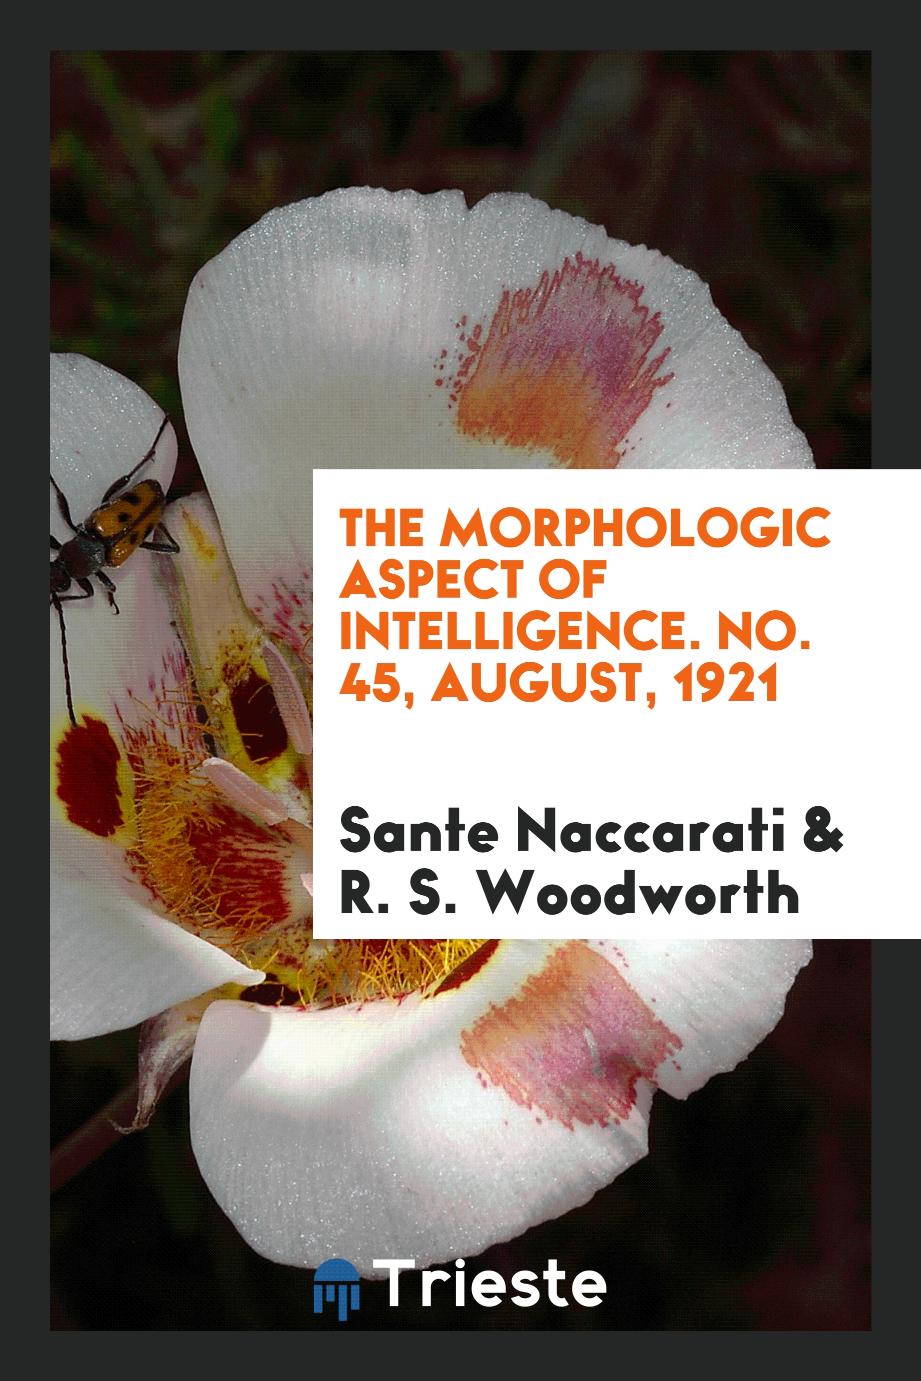 The morphologic aspect of intelligence. No. 45, August, 1921